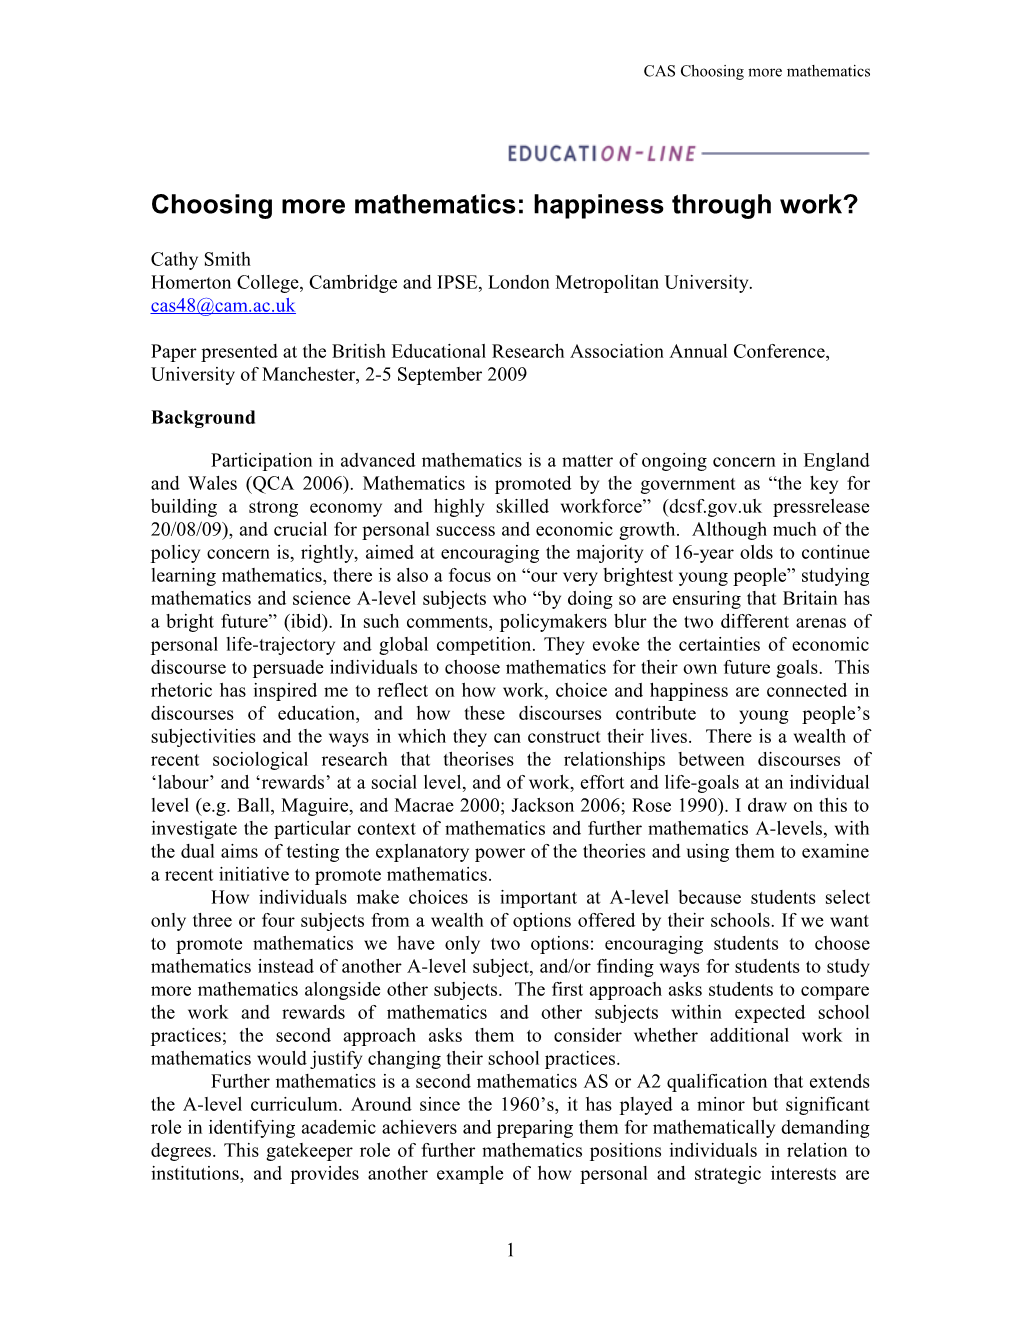 Choosing More Mathematics: Happiness Through Work?